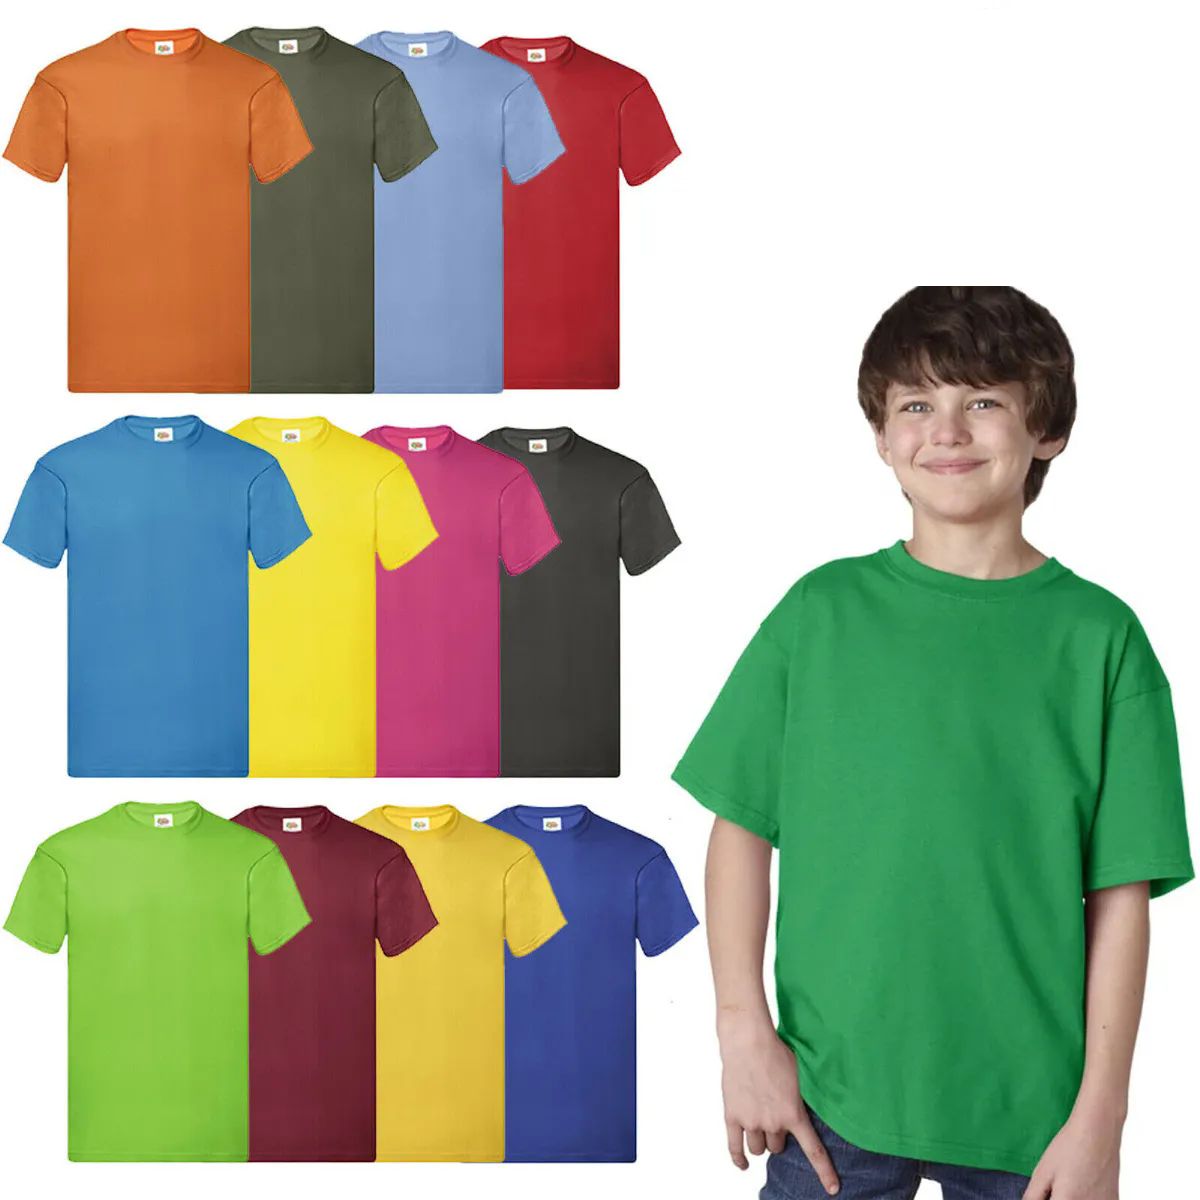 360 Bulk Billion Hats Kids Youth Cotton Assorted Colors T Shirts Size xs